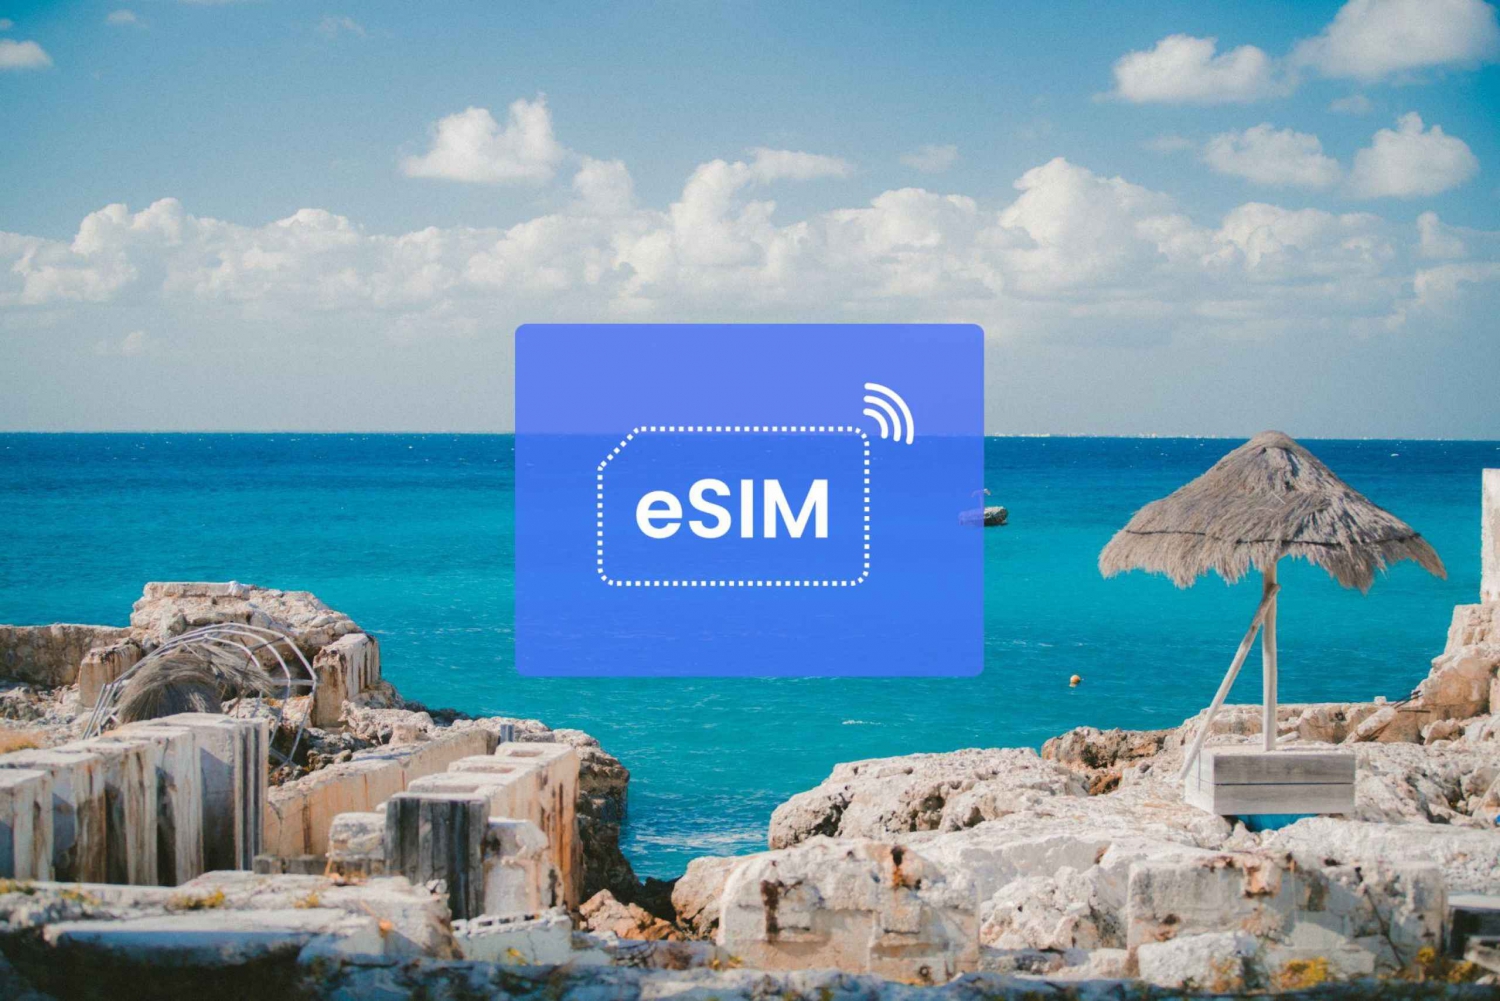 Cozumel: Mexico eSIM Roaming Mobile Data Plan